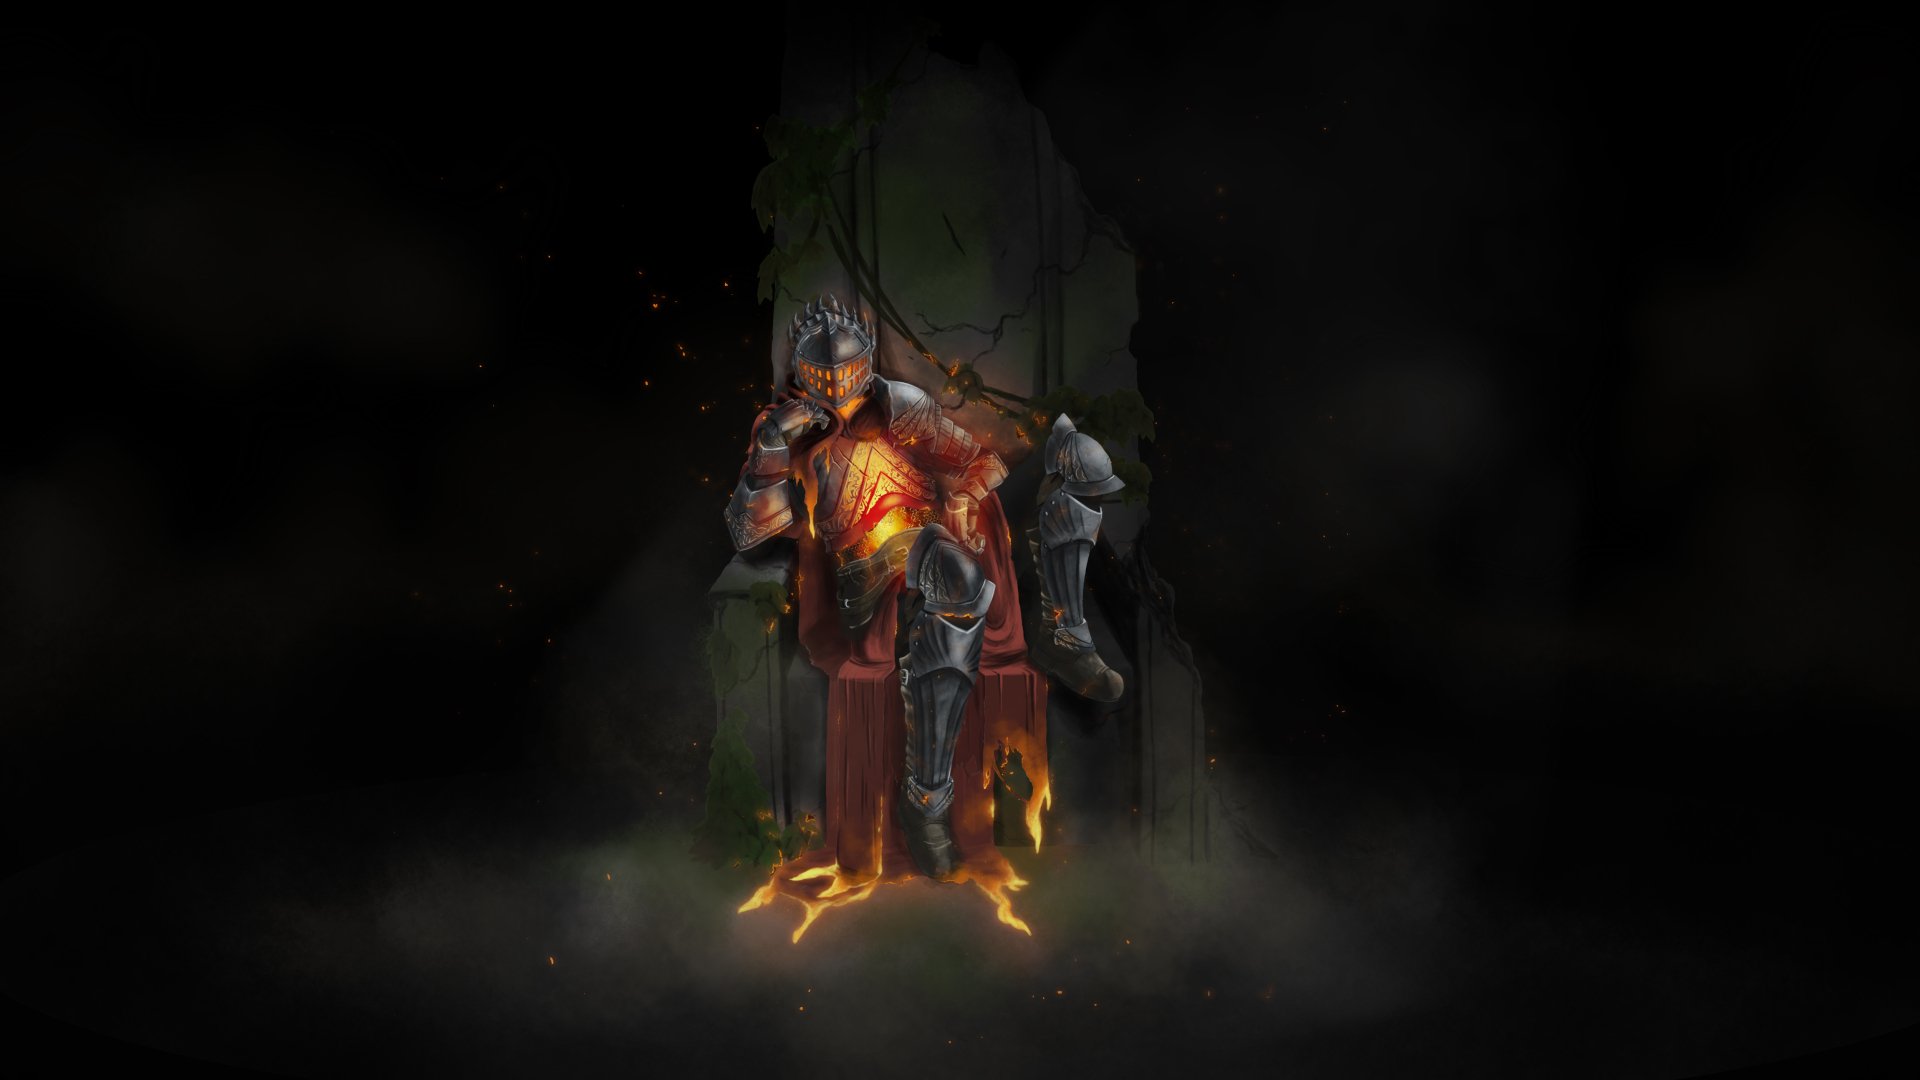  Dark  Souls III Lord  of cinder 4k Ultra HD  Wallpaper  